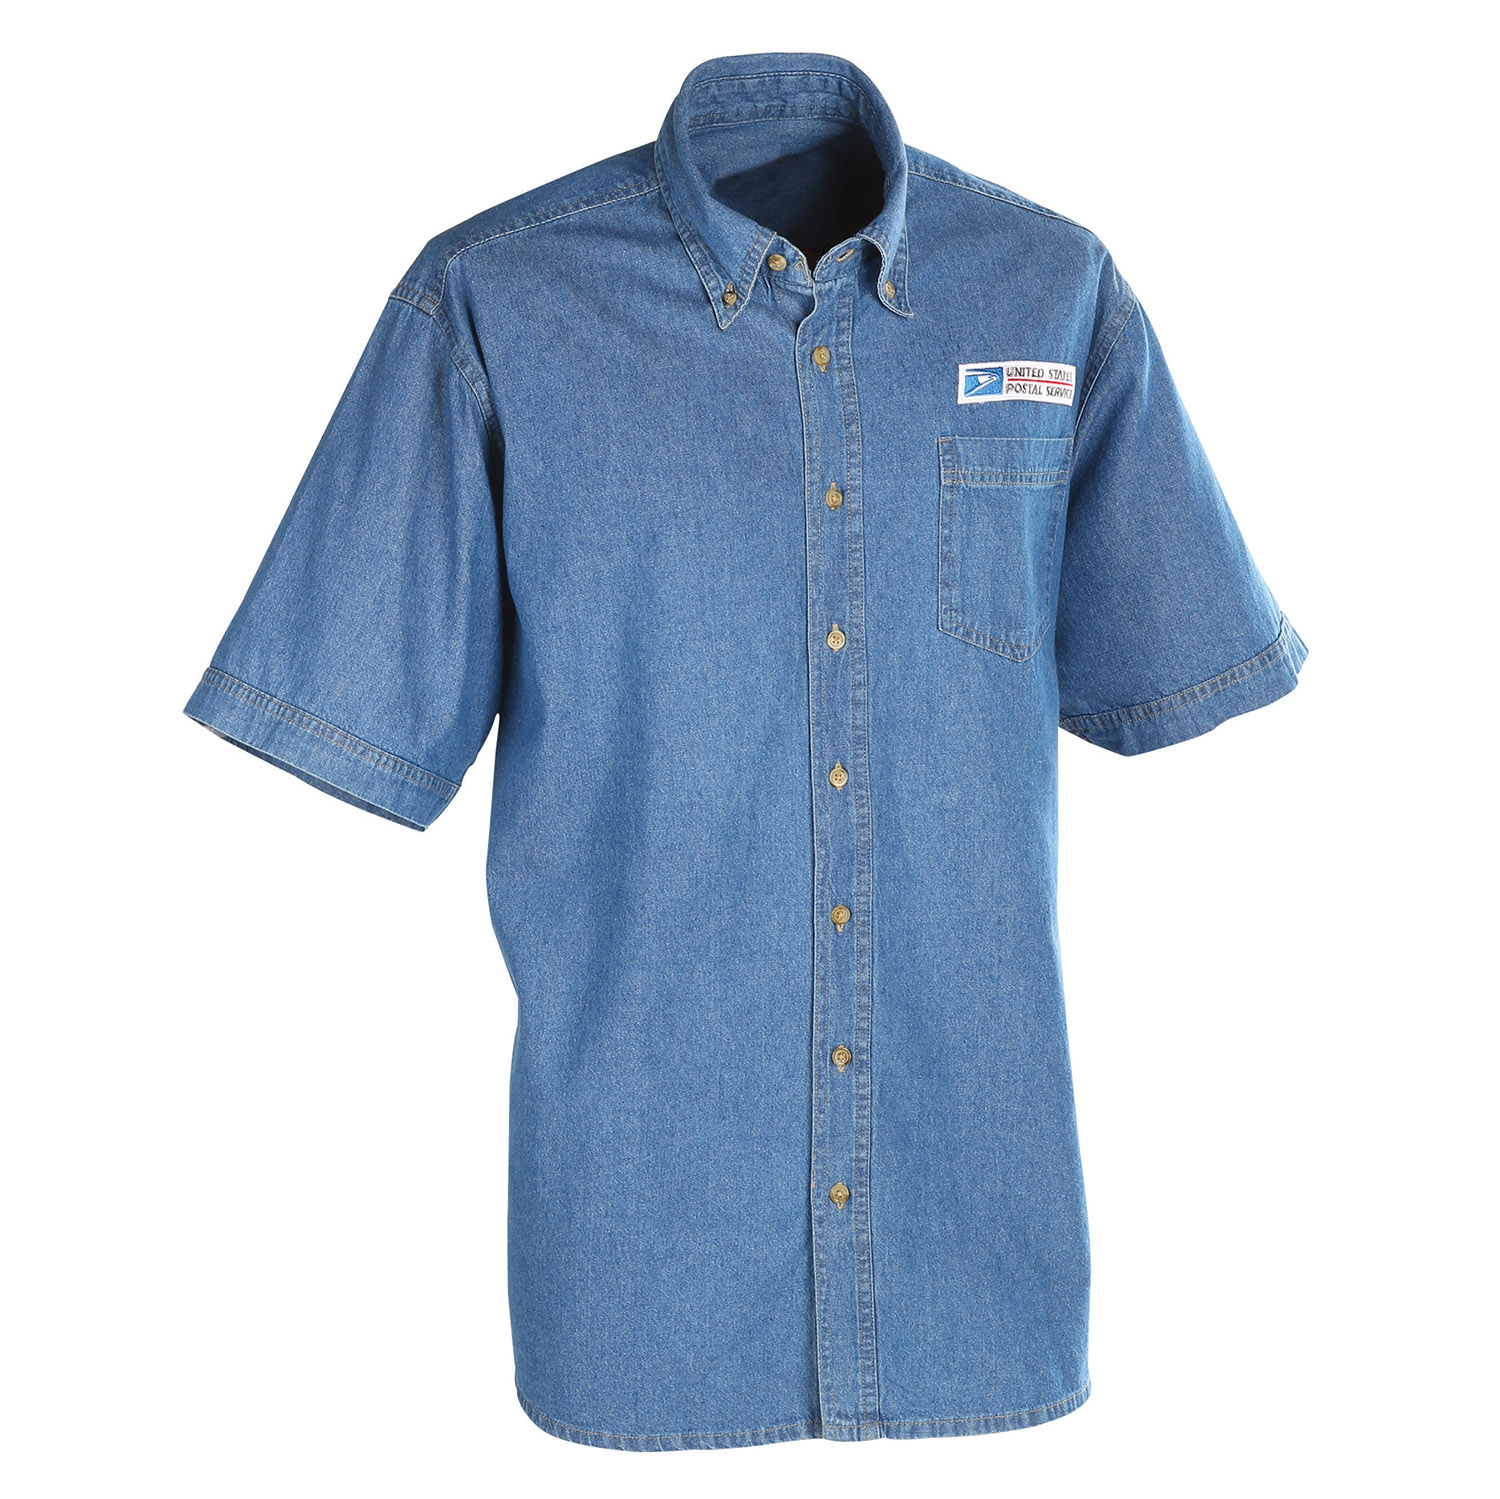 Postal Uniform Shirt Denim Short Sleeve for Mail Handlers...